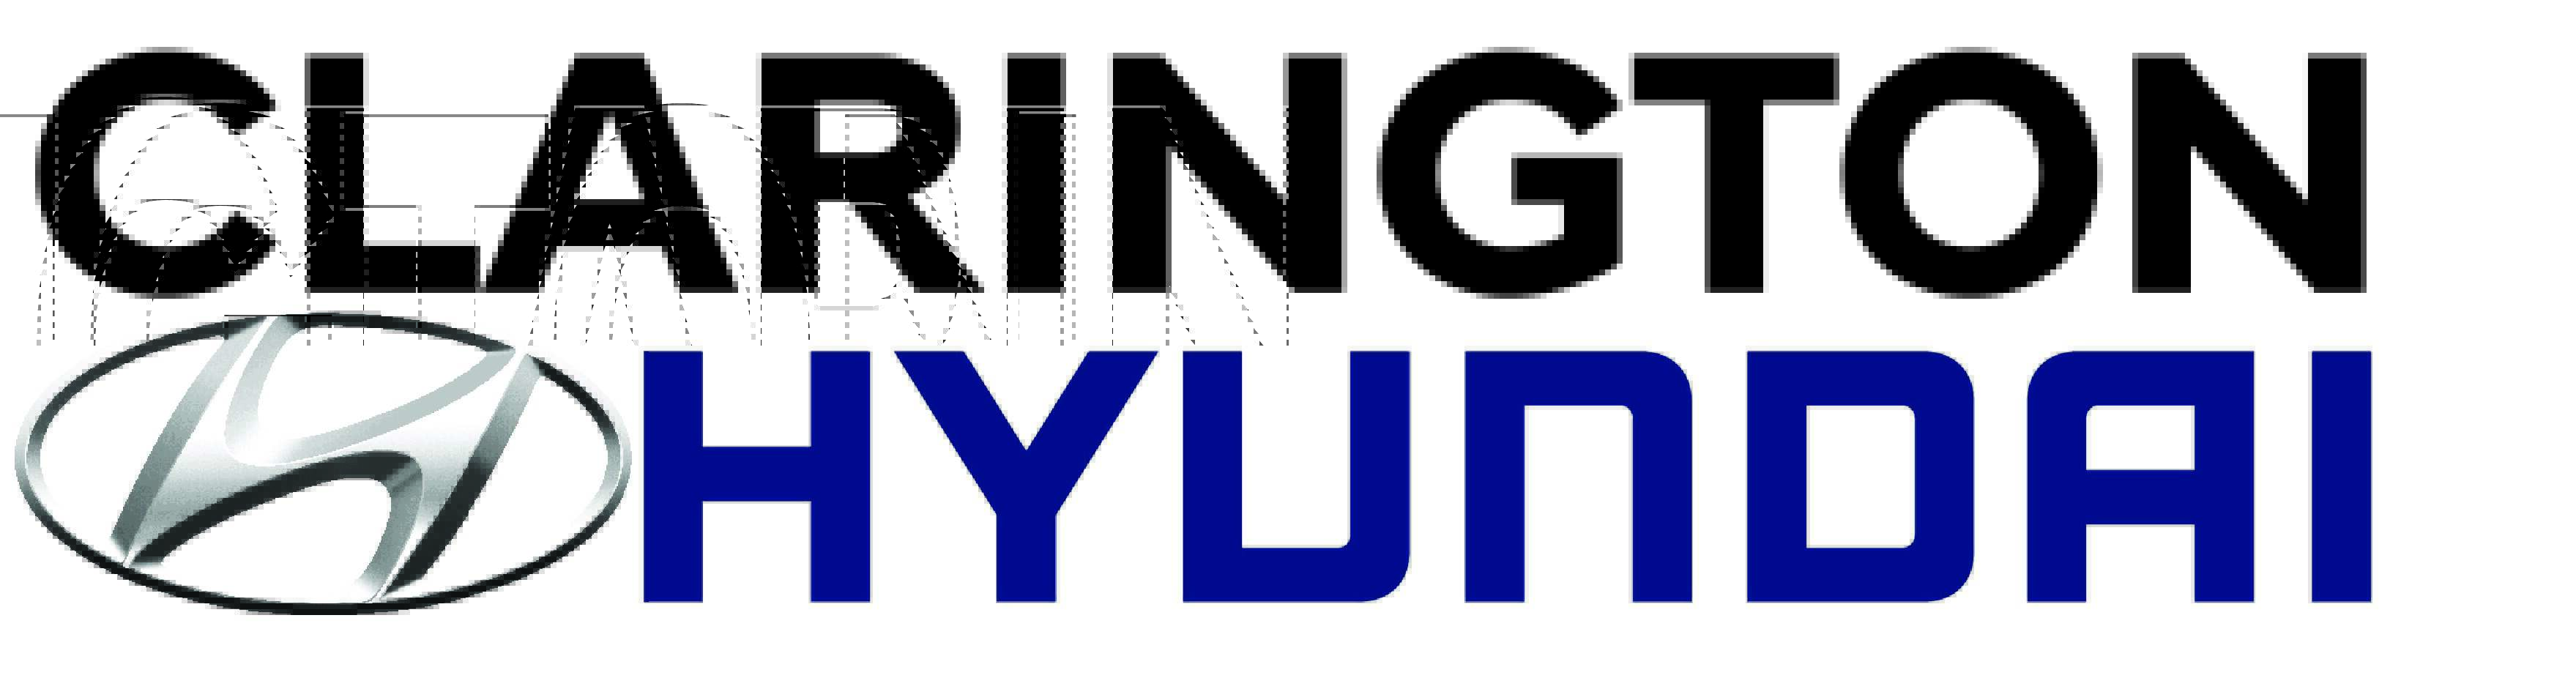 Clarington Hyundai